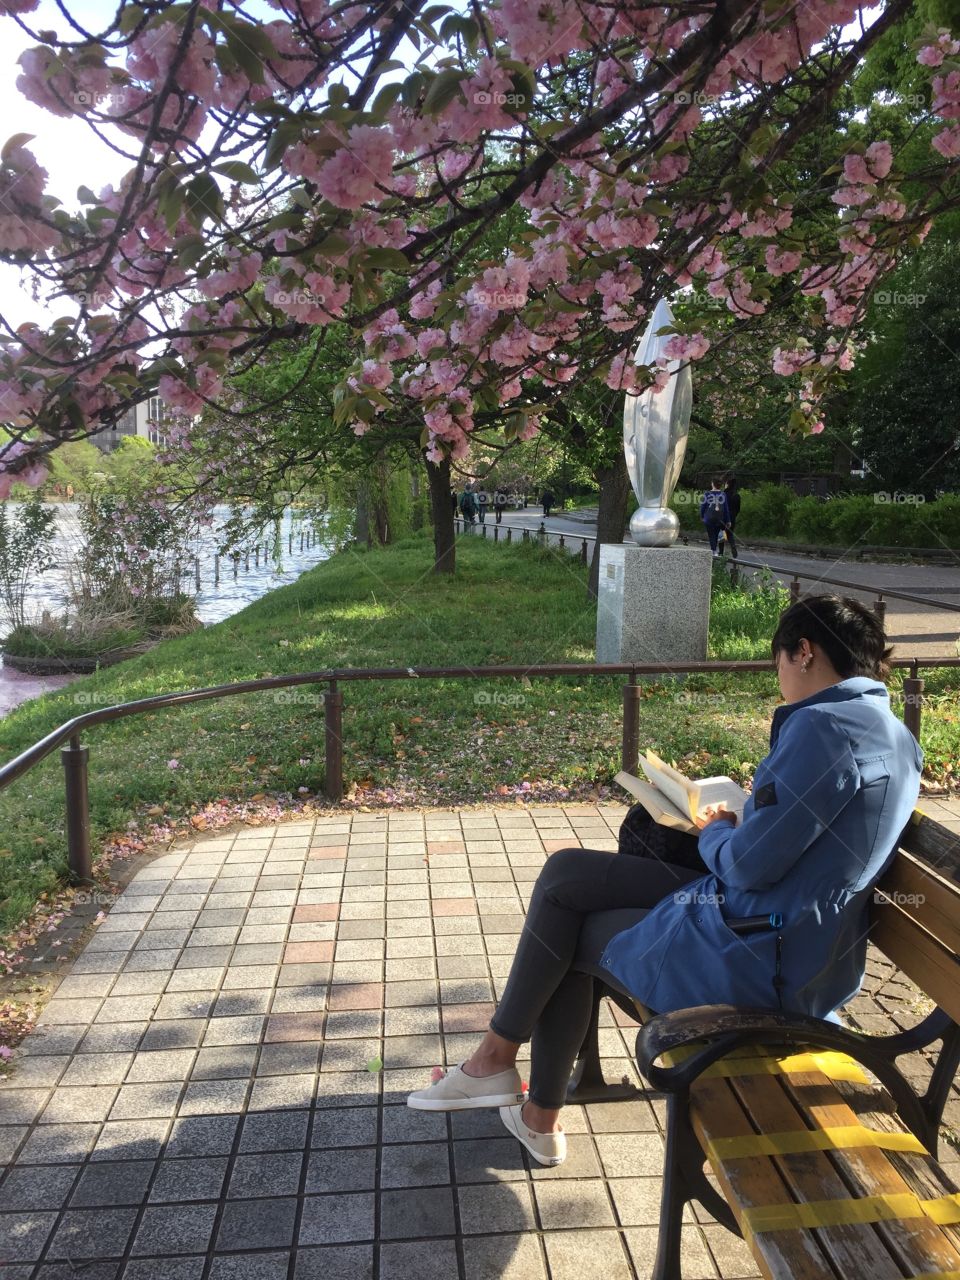 Enjoying a book under the cherry blossom